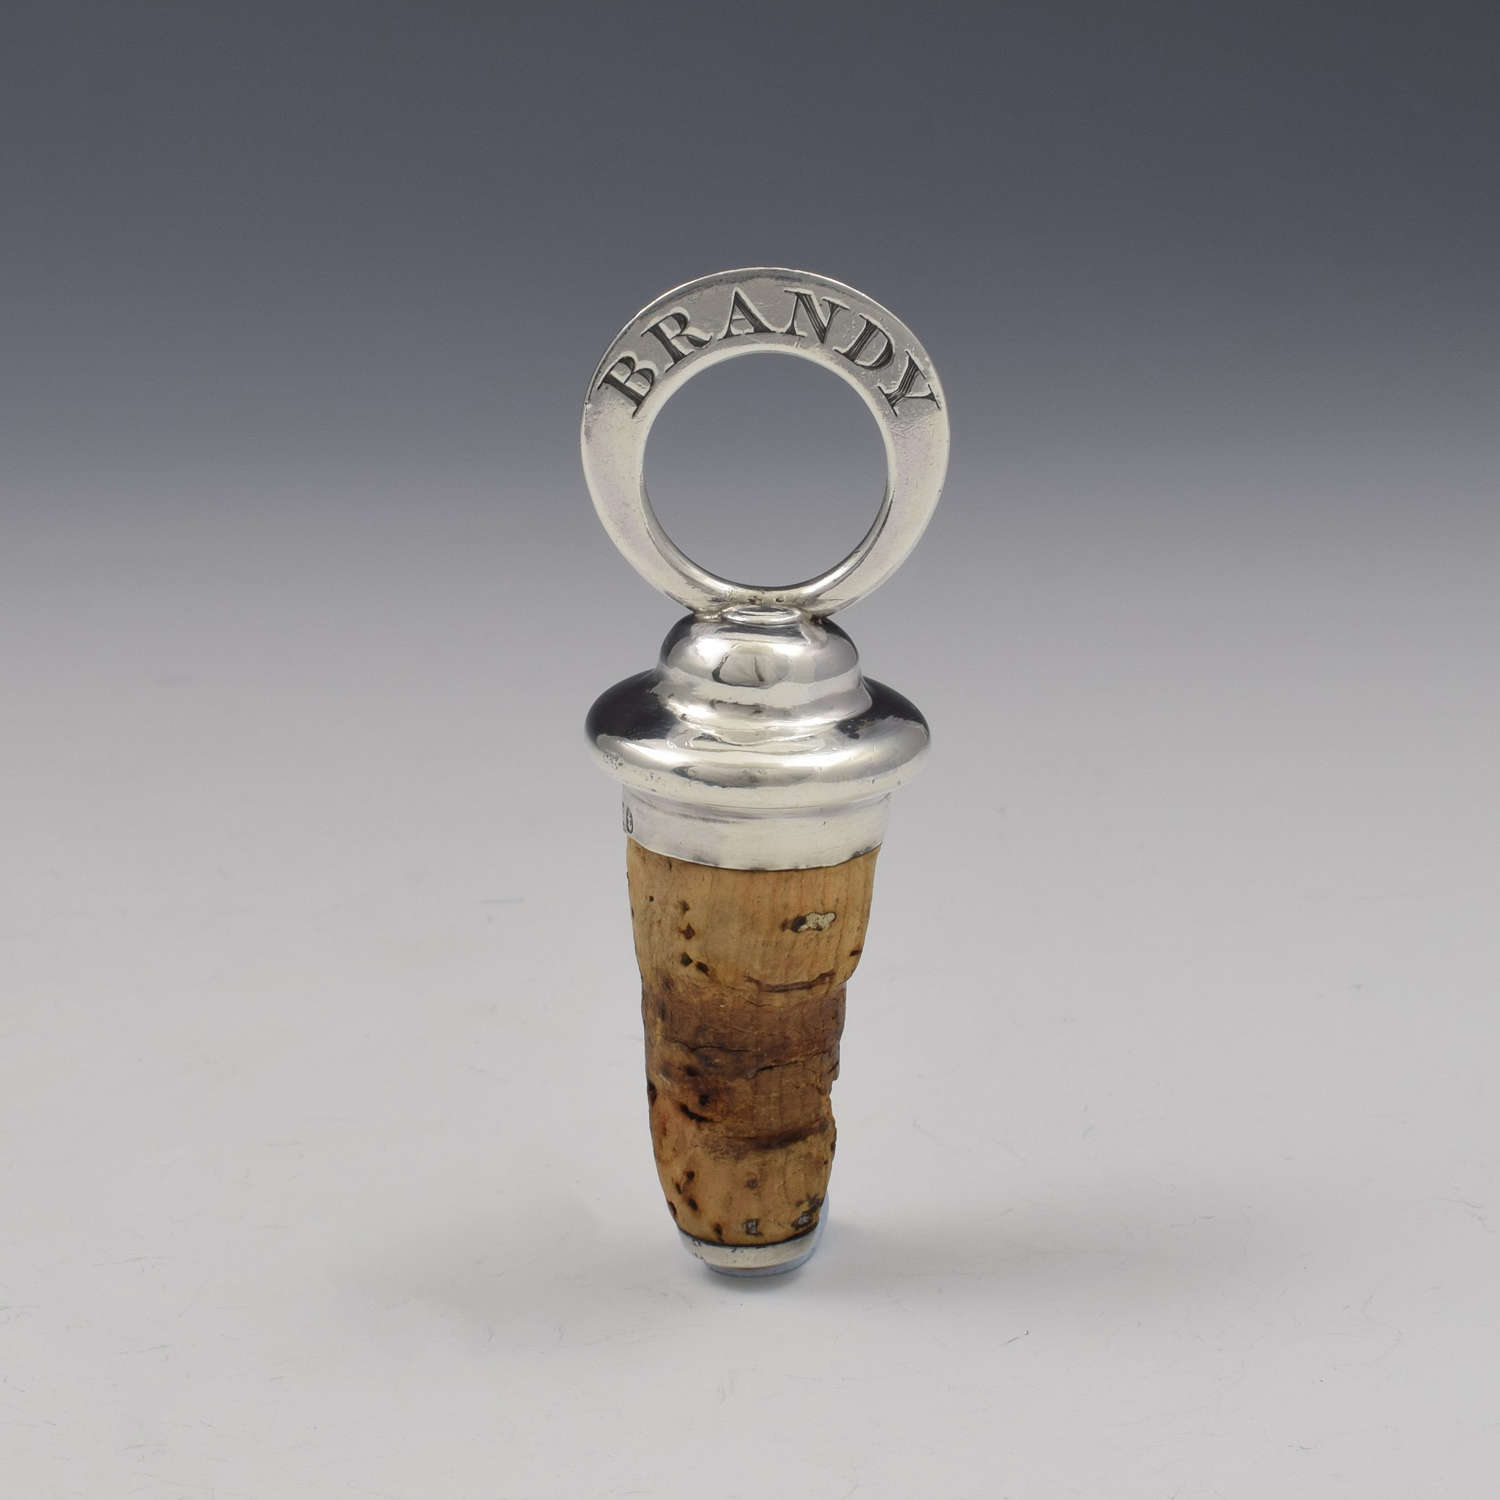 Early Victorian Silver Brandy Cork Decanter / Bottle Stopper